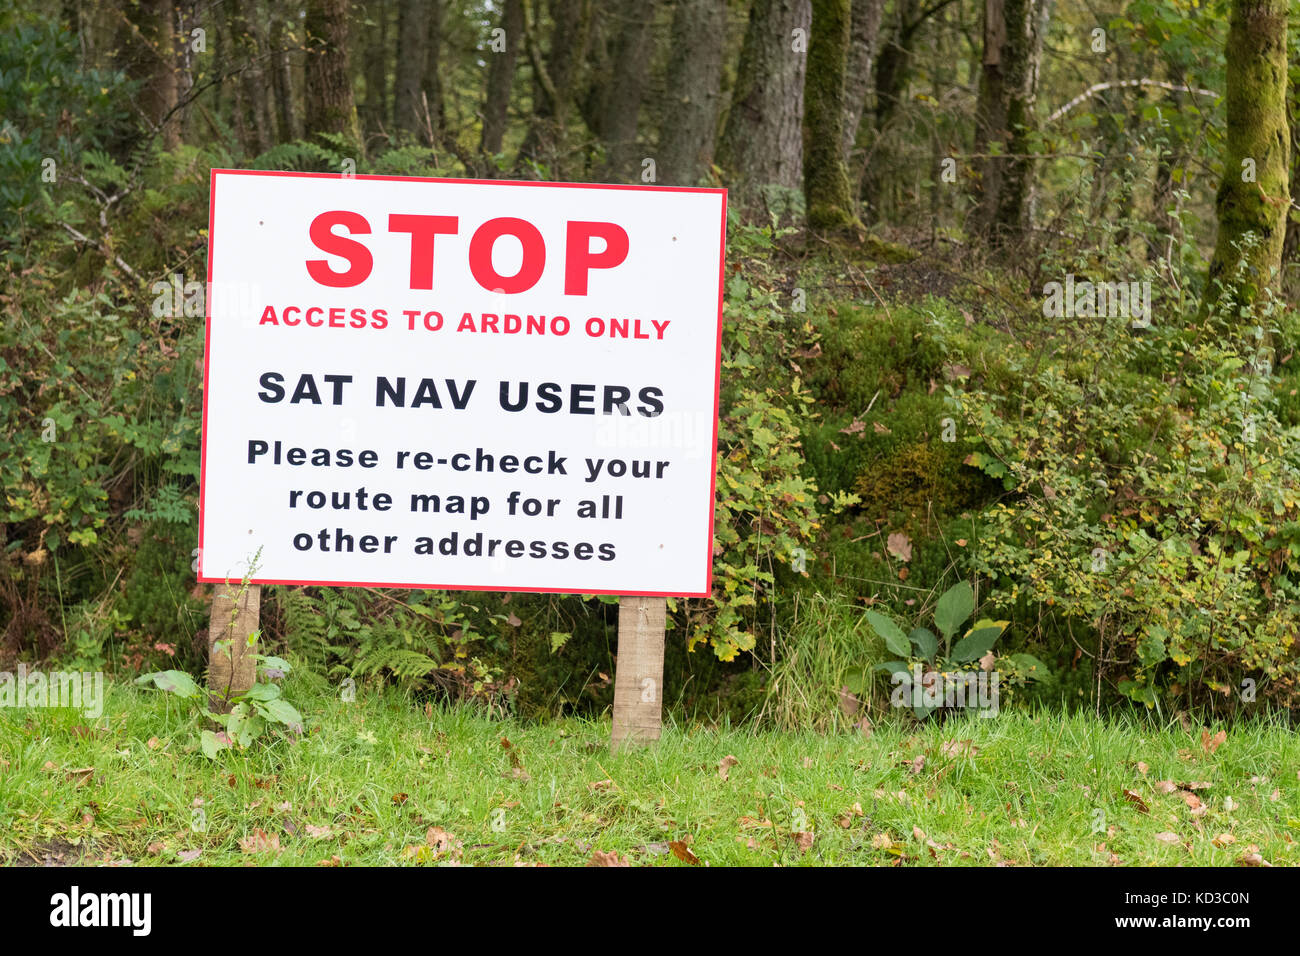 Sat Nav users stop check route map sign, Ardno, Scotland, UK Stock Photo